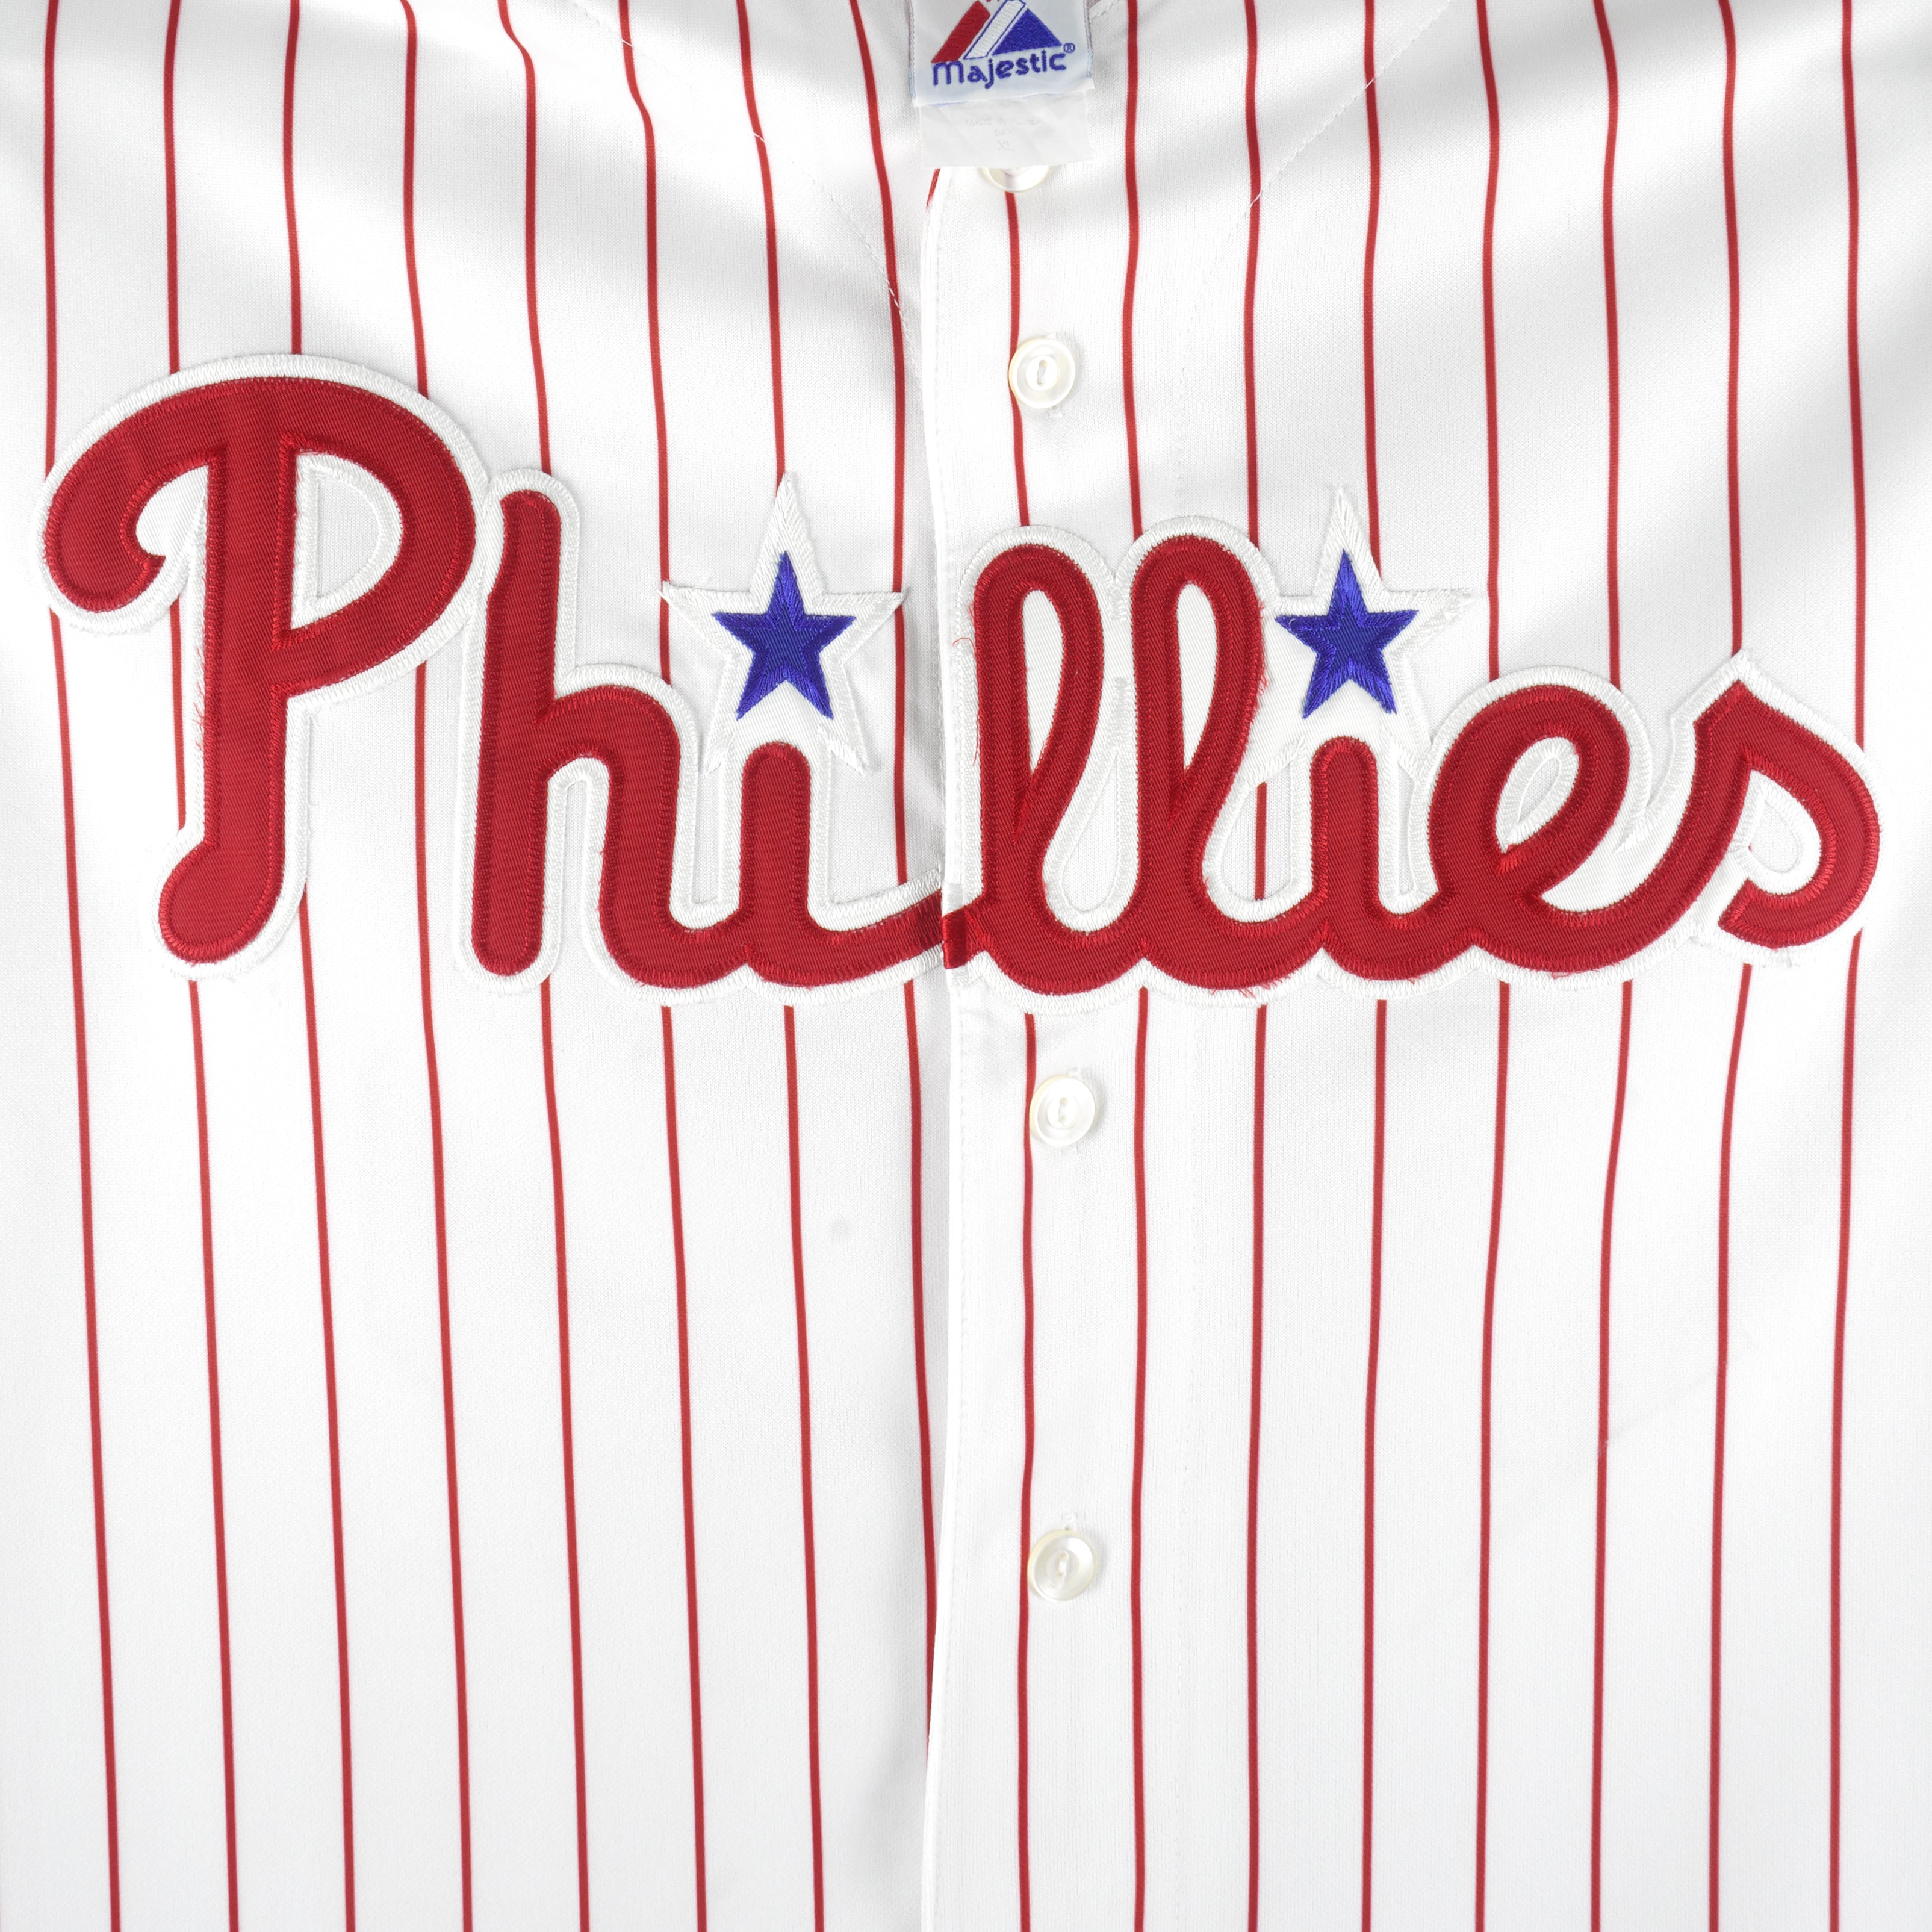 Philadelphia Phillies *Utley* MLB Nike Shirt S. Boys